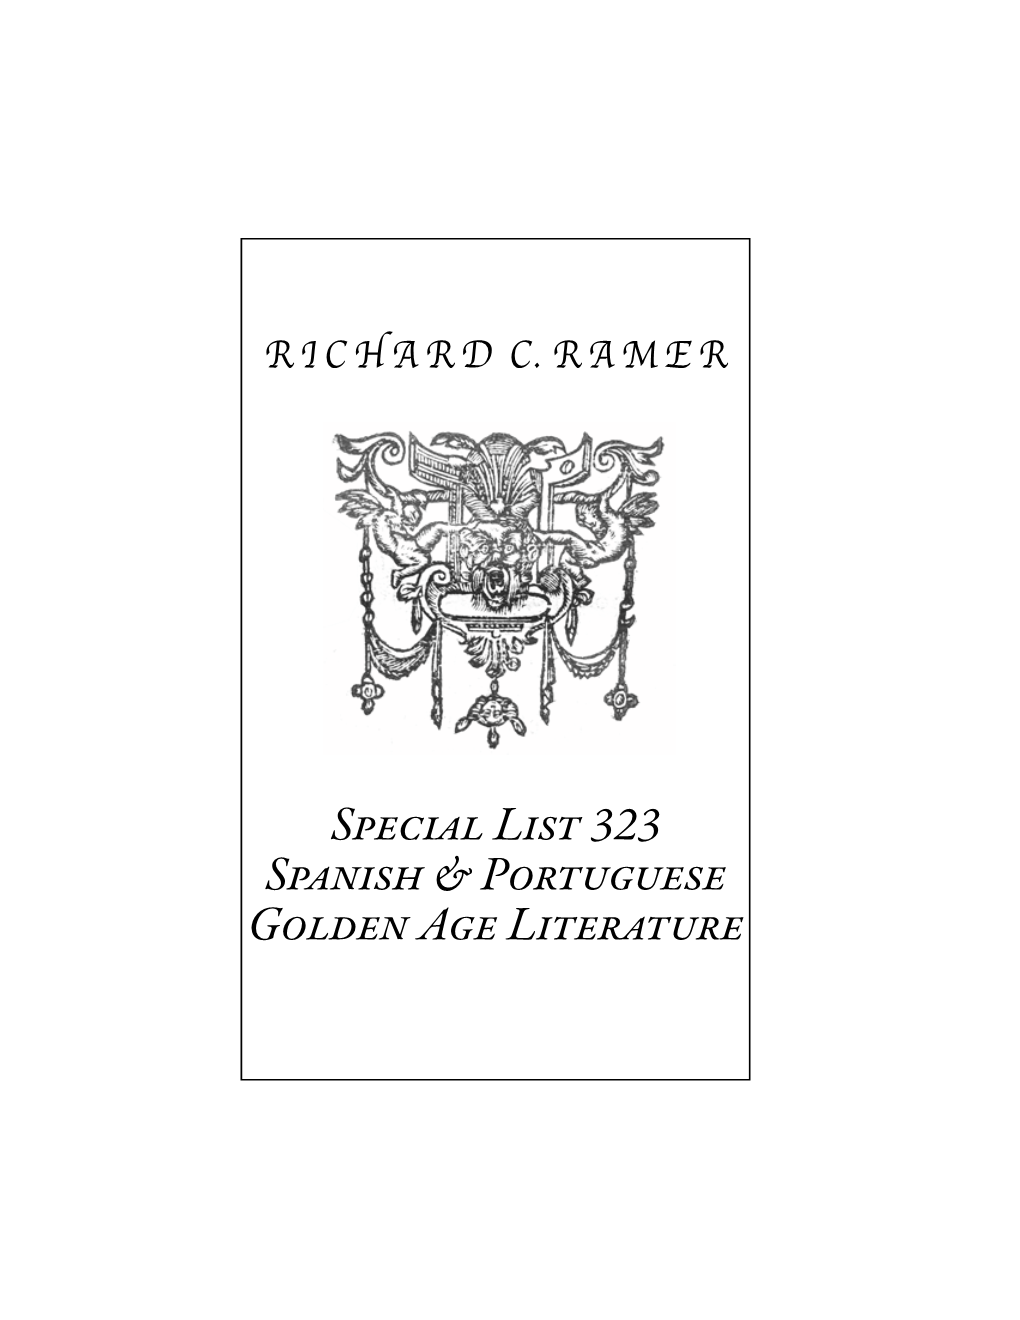 Special List 323: Spanish & Portuguese Golden Age Literature